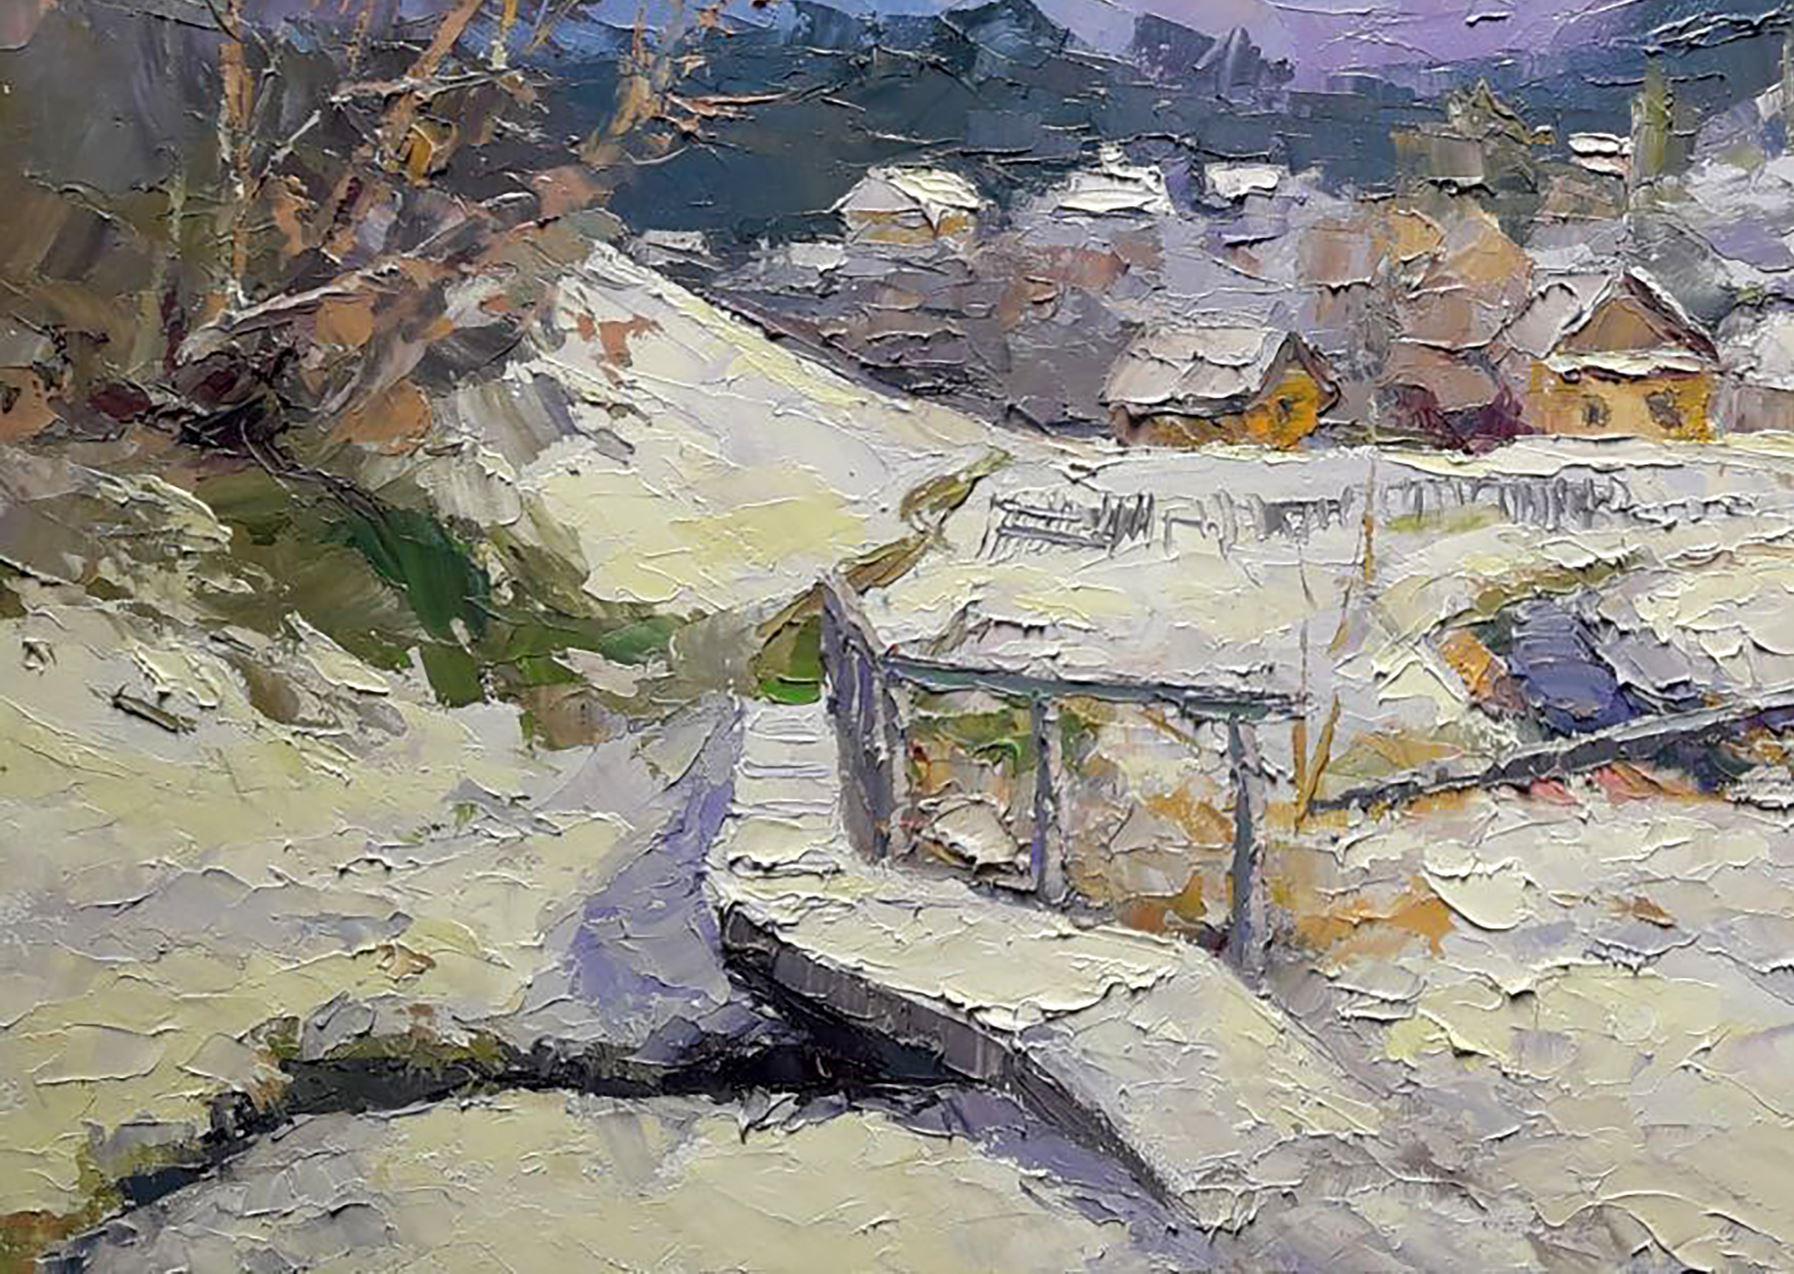 Artist: Boris Serdyuk 
Work: Original oil painting, handmade artwork, one of a kind 
Medium: Oil on Canvas
Style: Impressionism
Year: 2020
Title: Winter Vorokhta
Size: 19.5